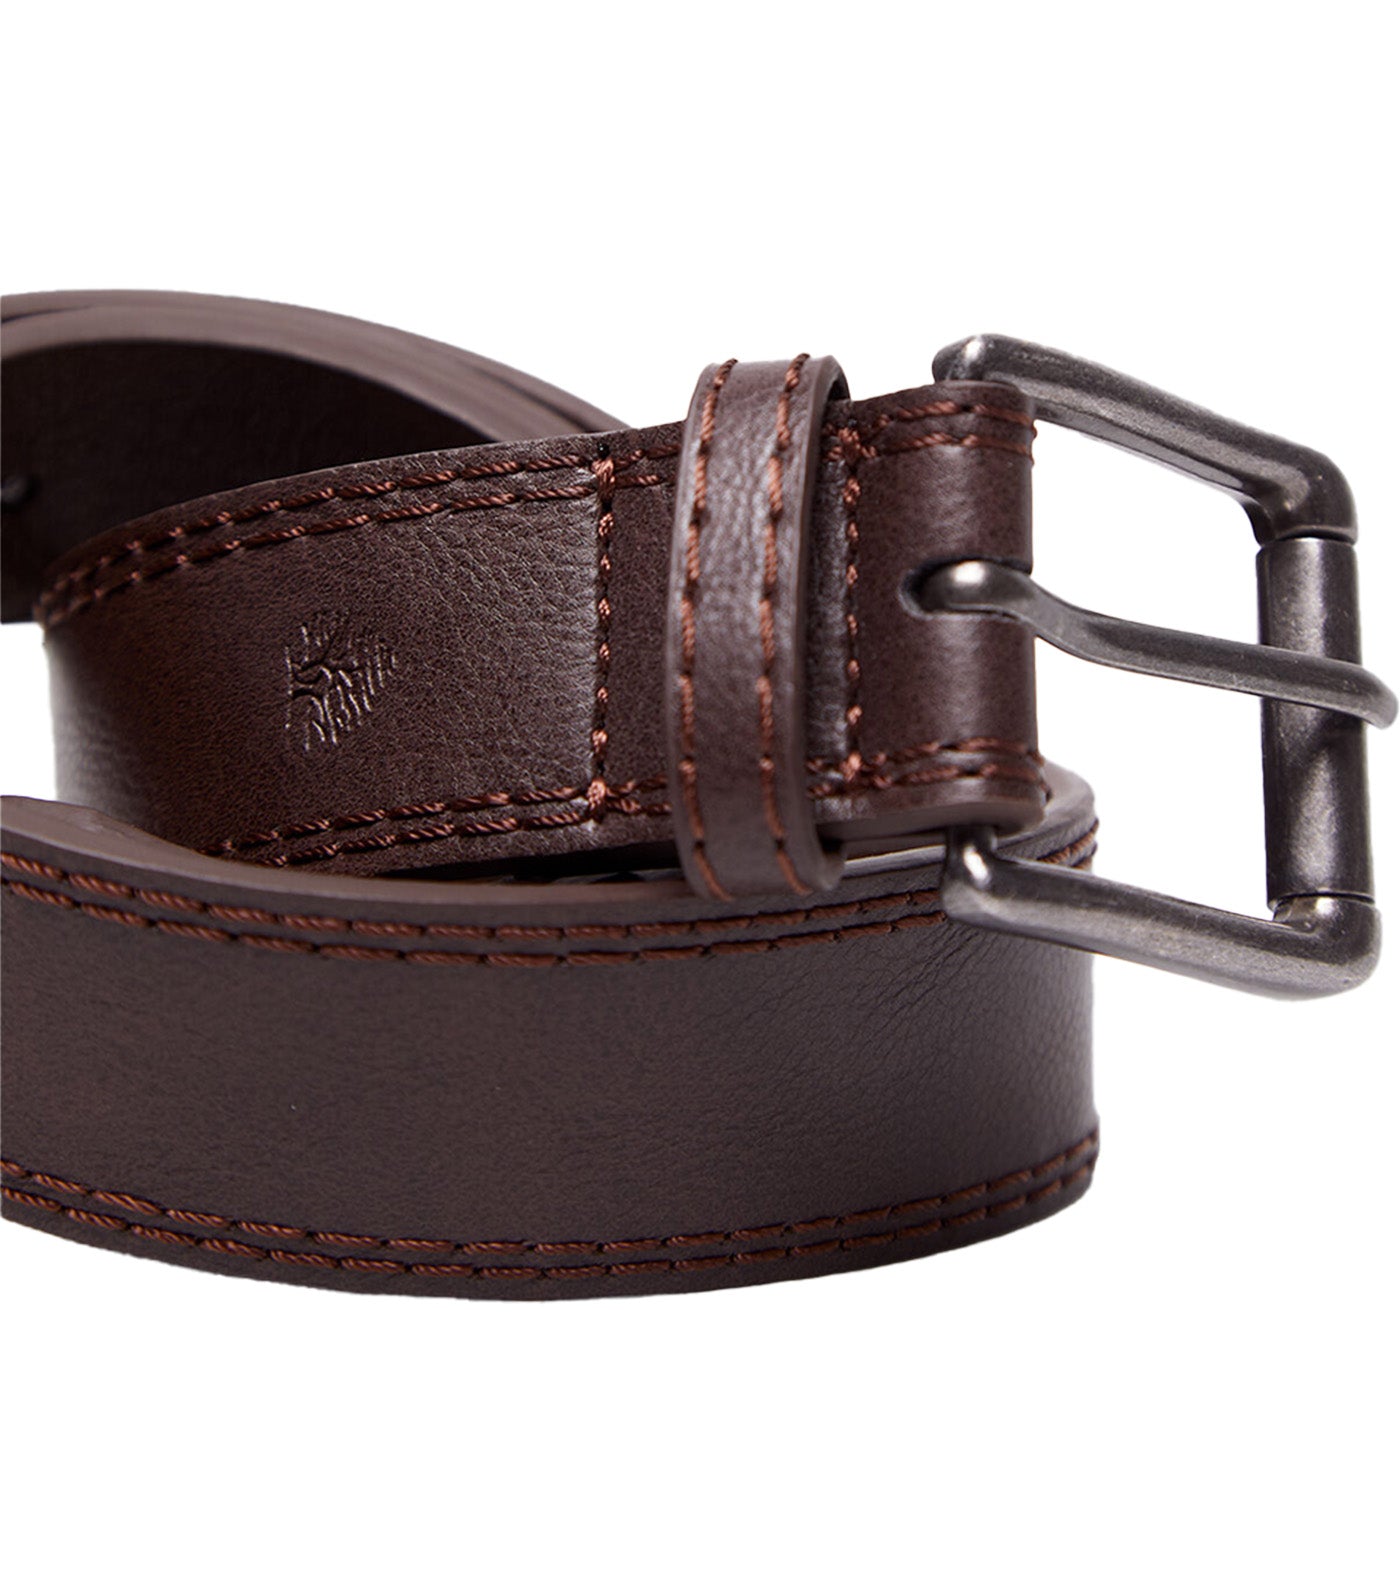 Leather Effect Belt with Stitching Dark Brown